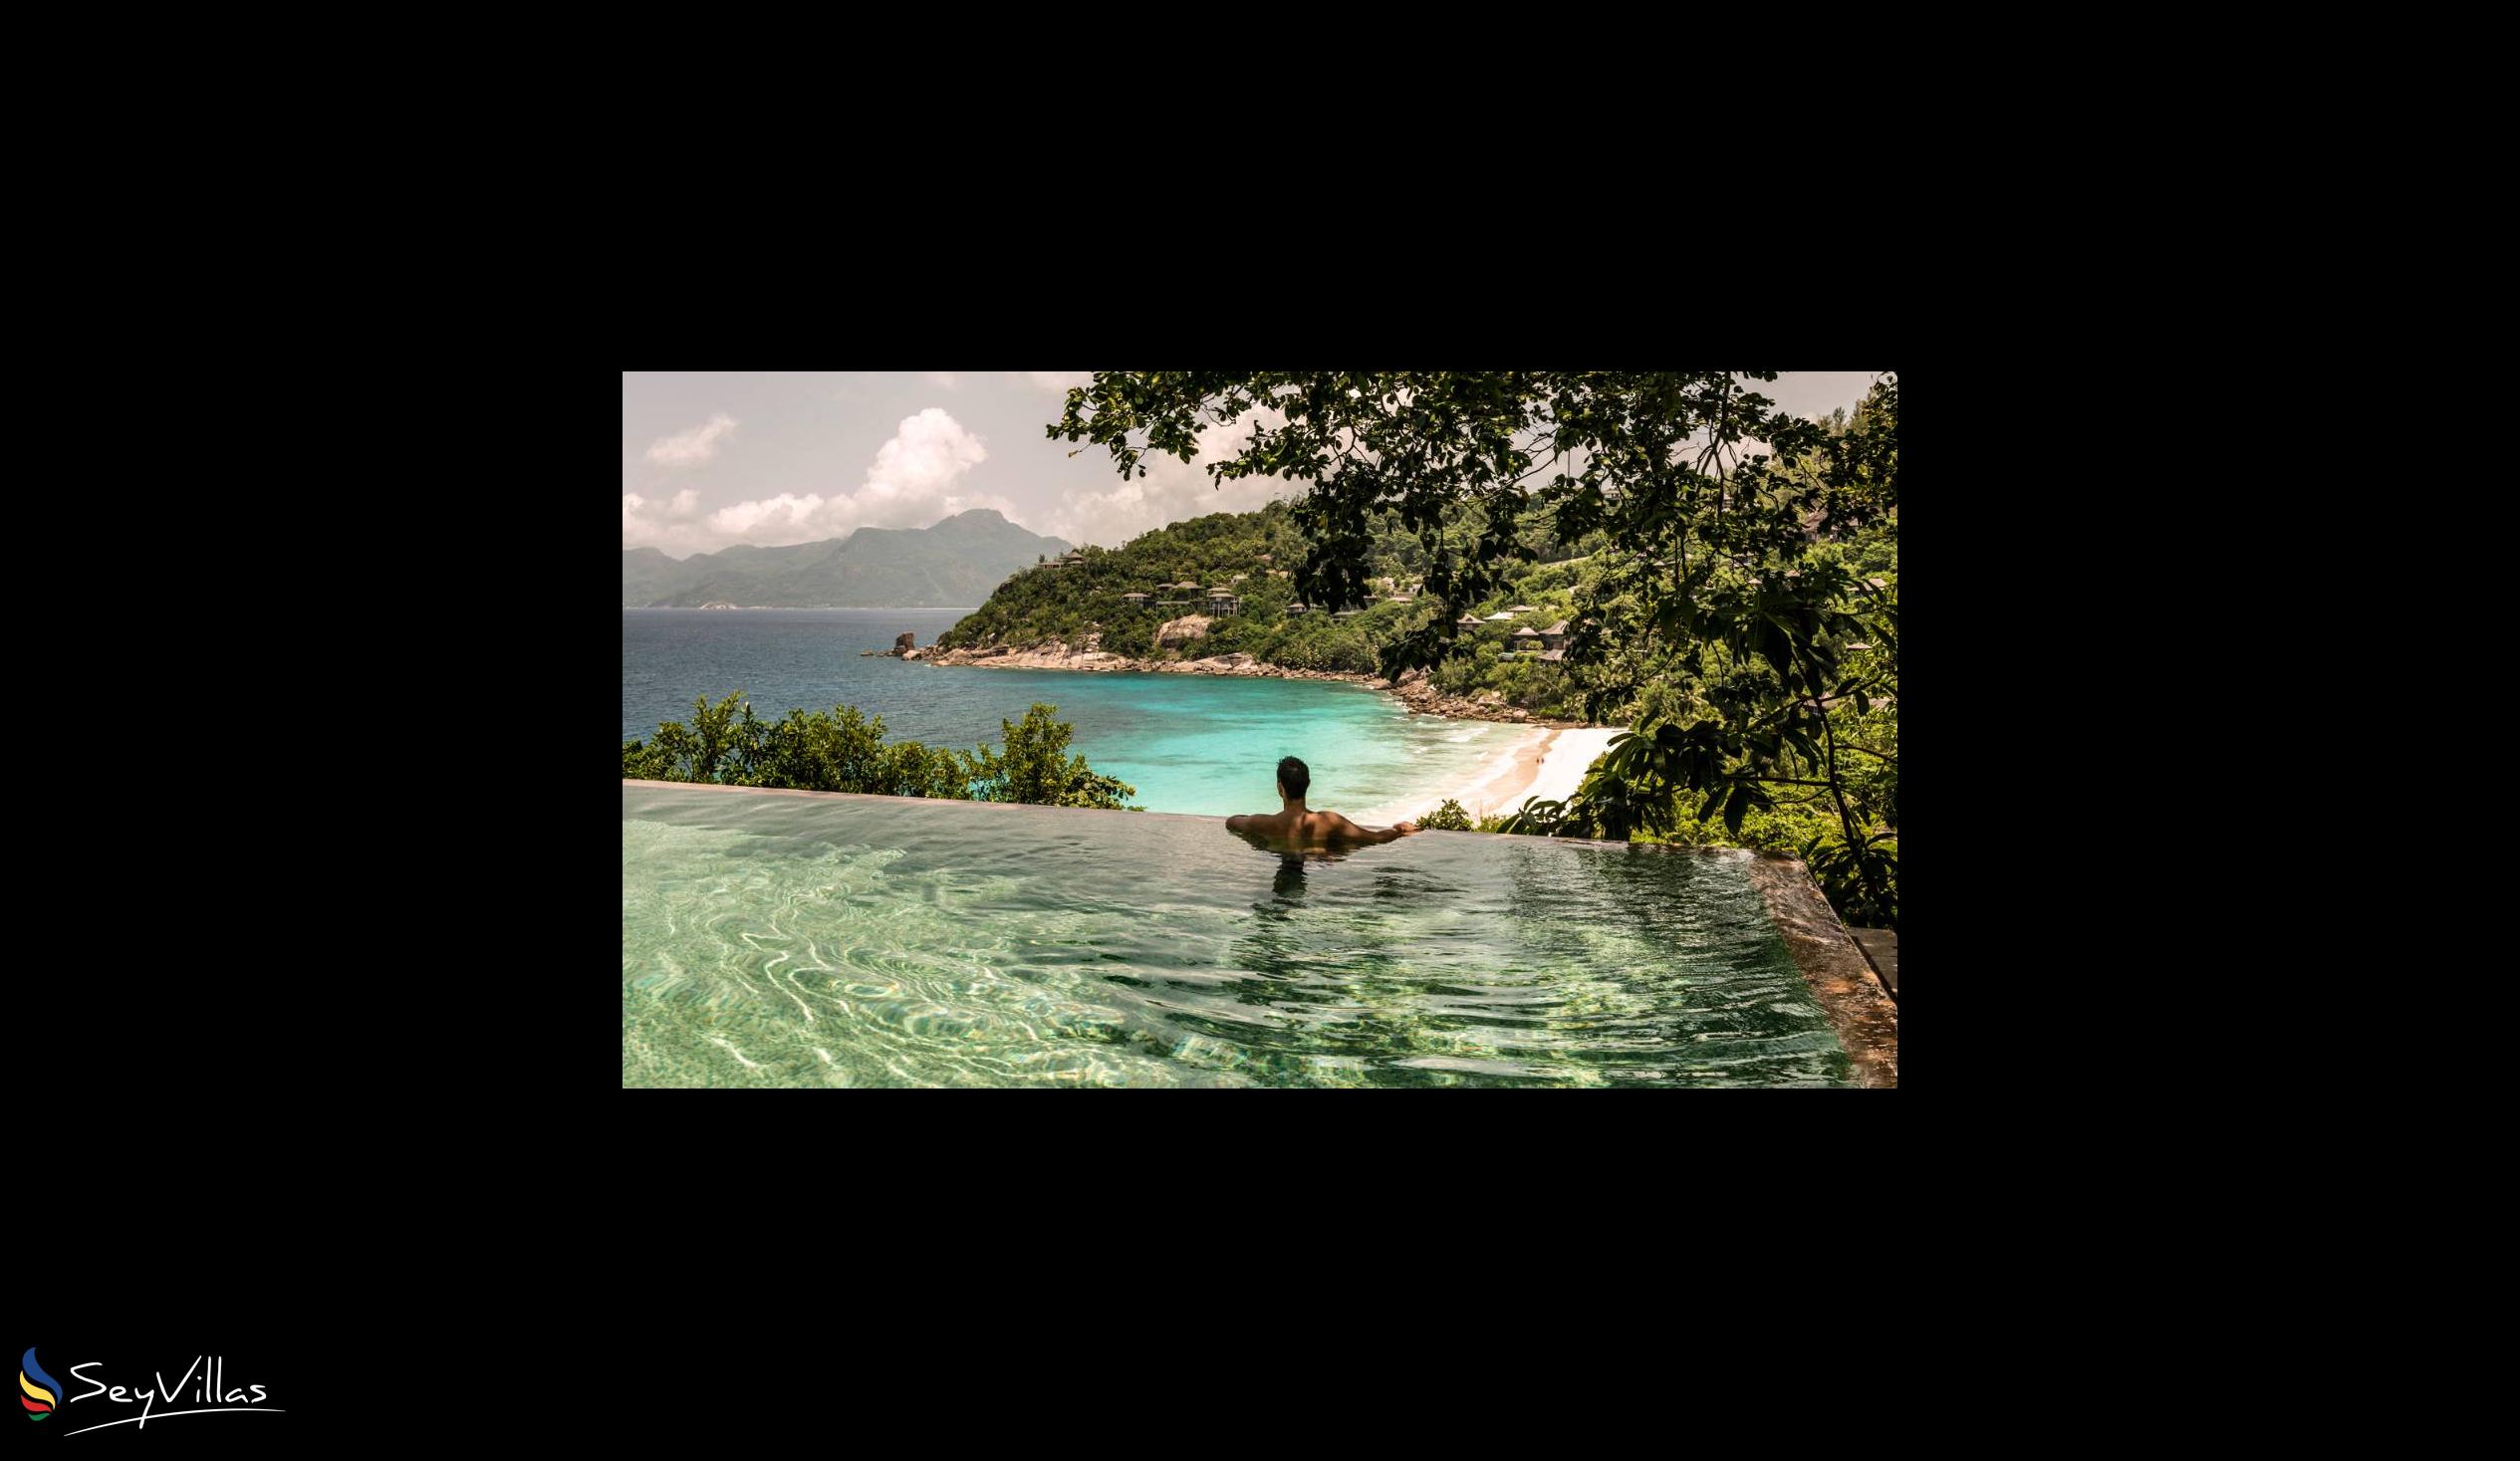 Photo 2: Four Seasons Resort - Outdoor area - Mahé (Seychelles)